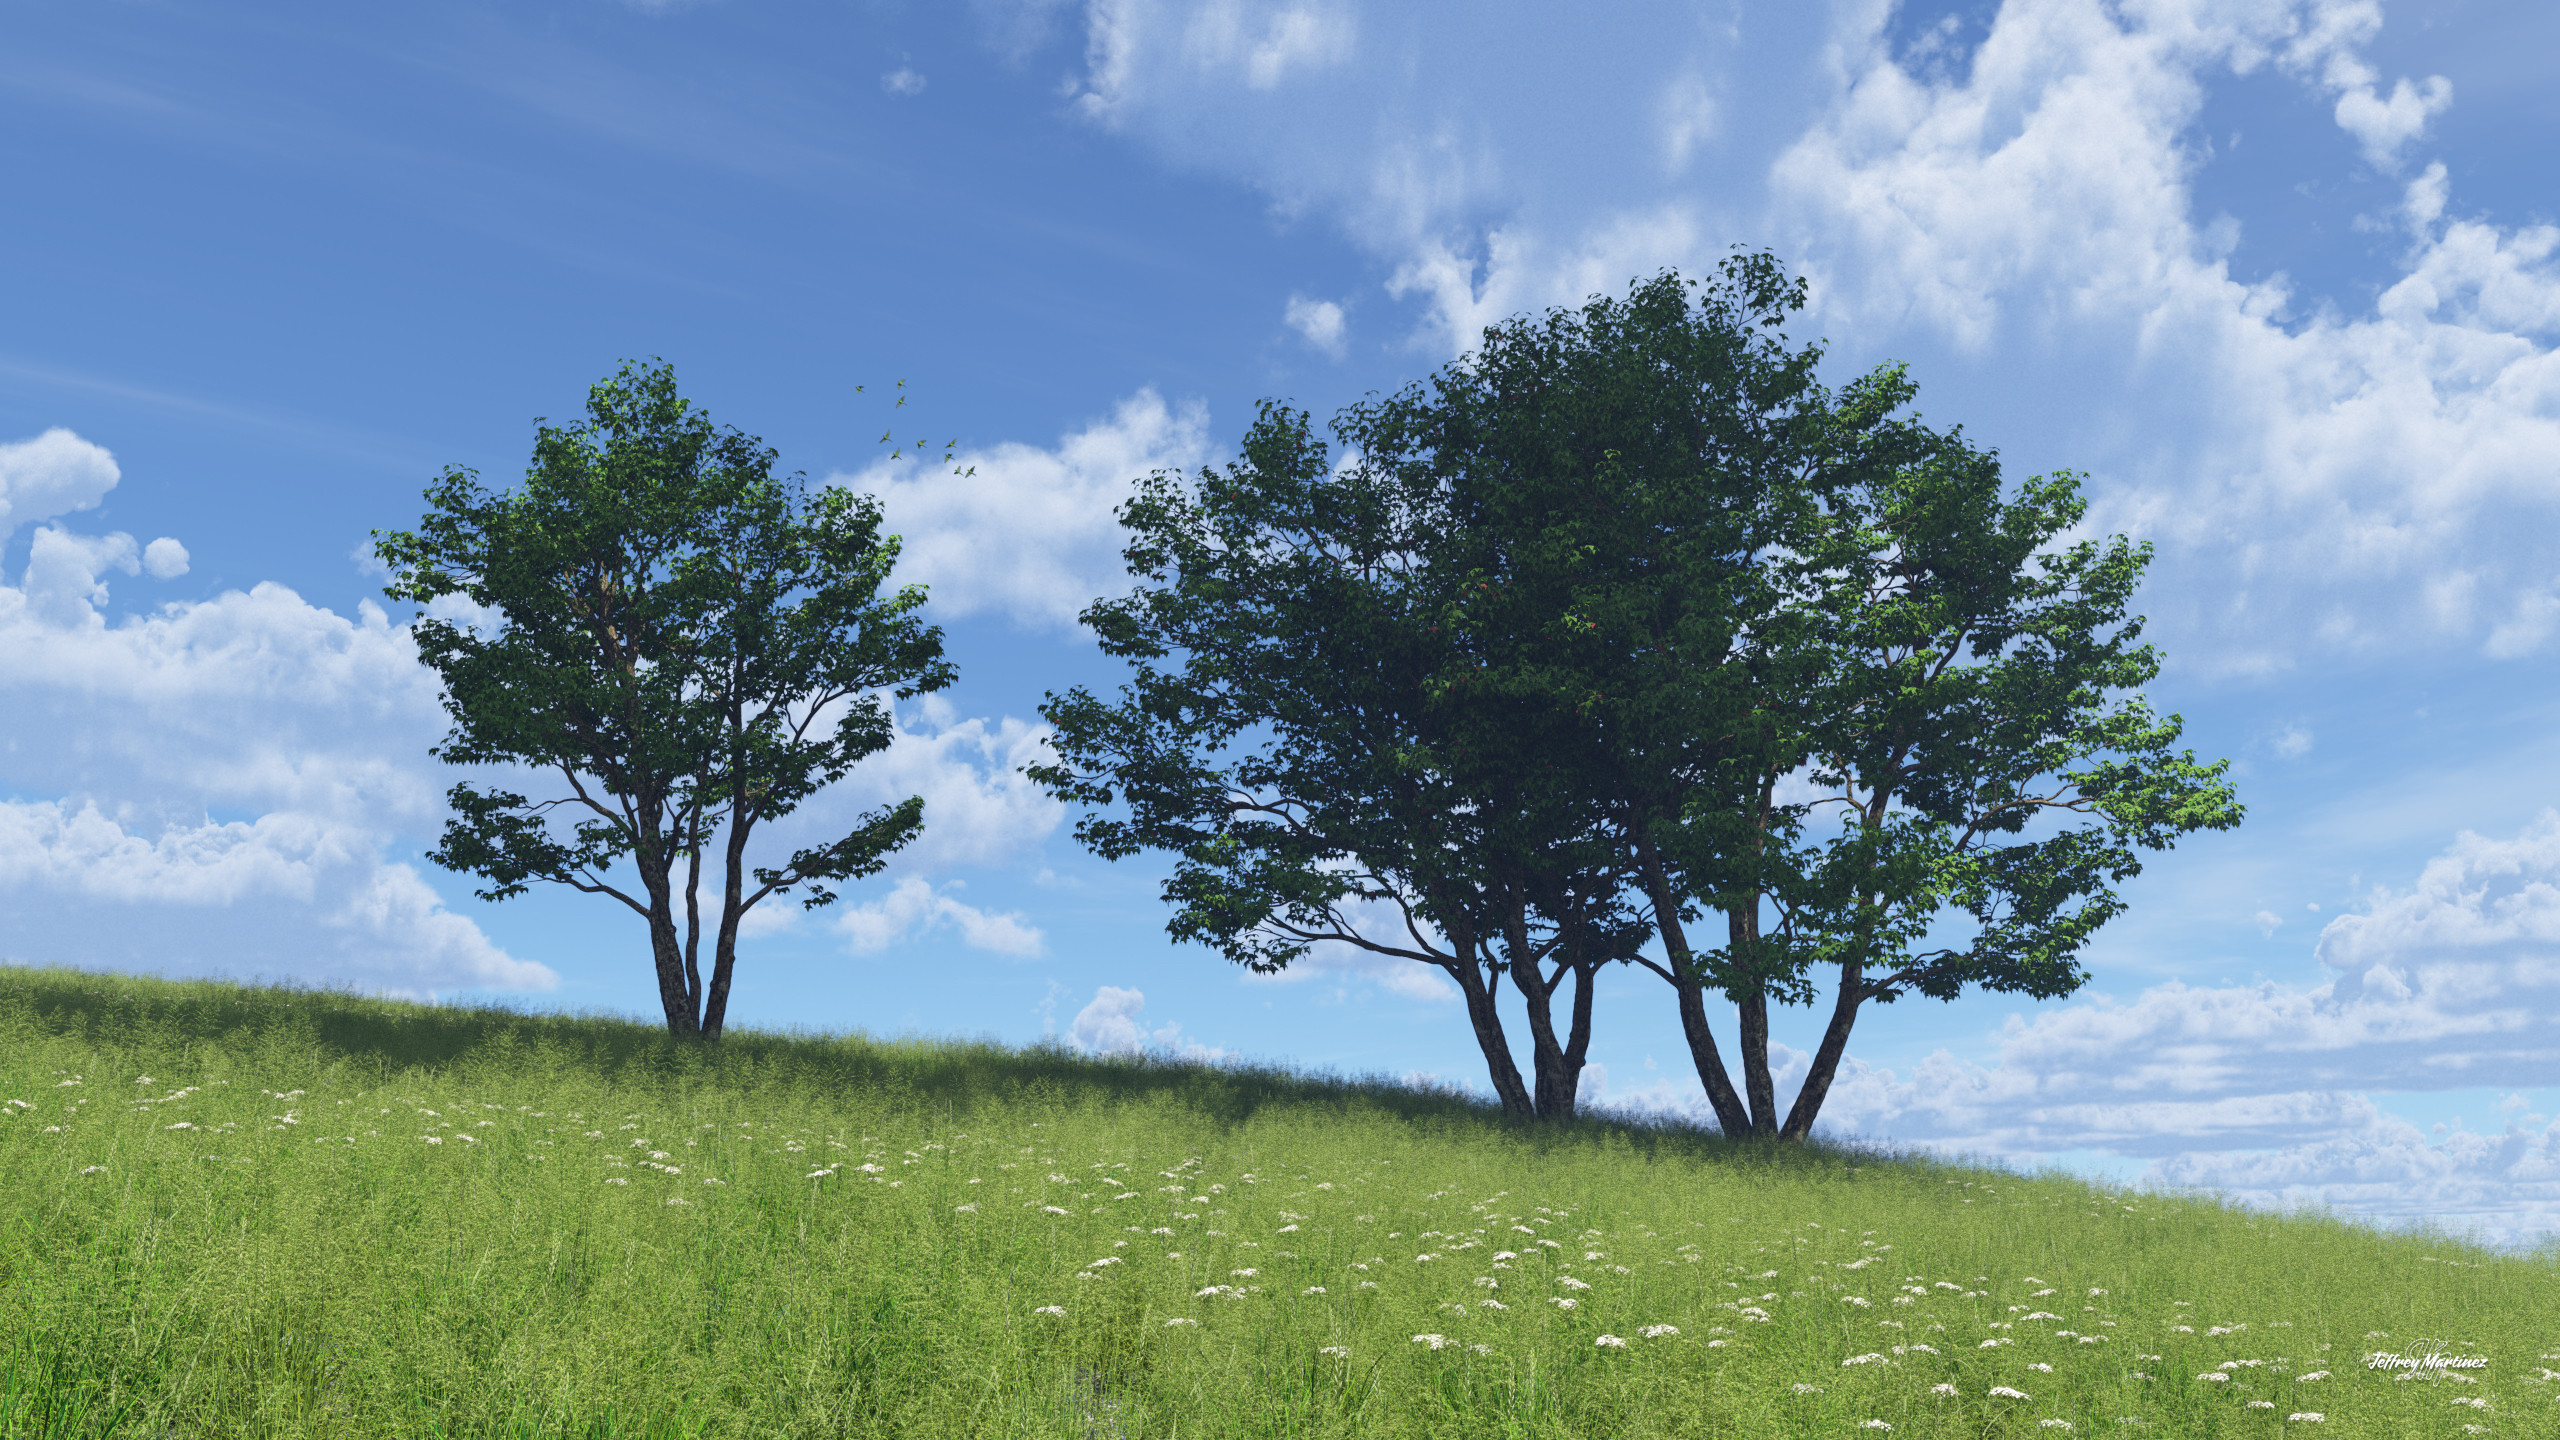 Trees on a Hill - Sun
20220622TG